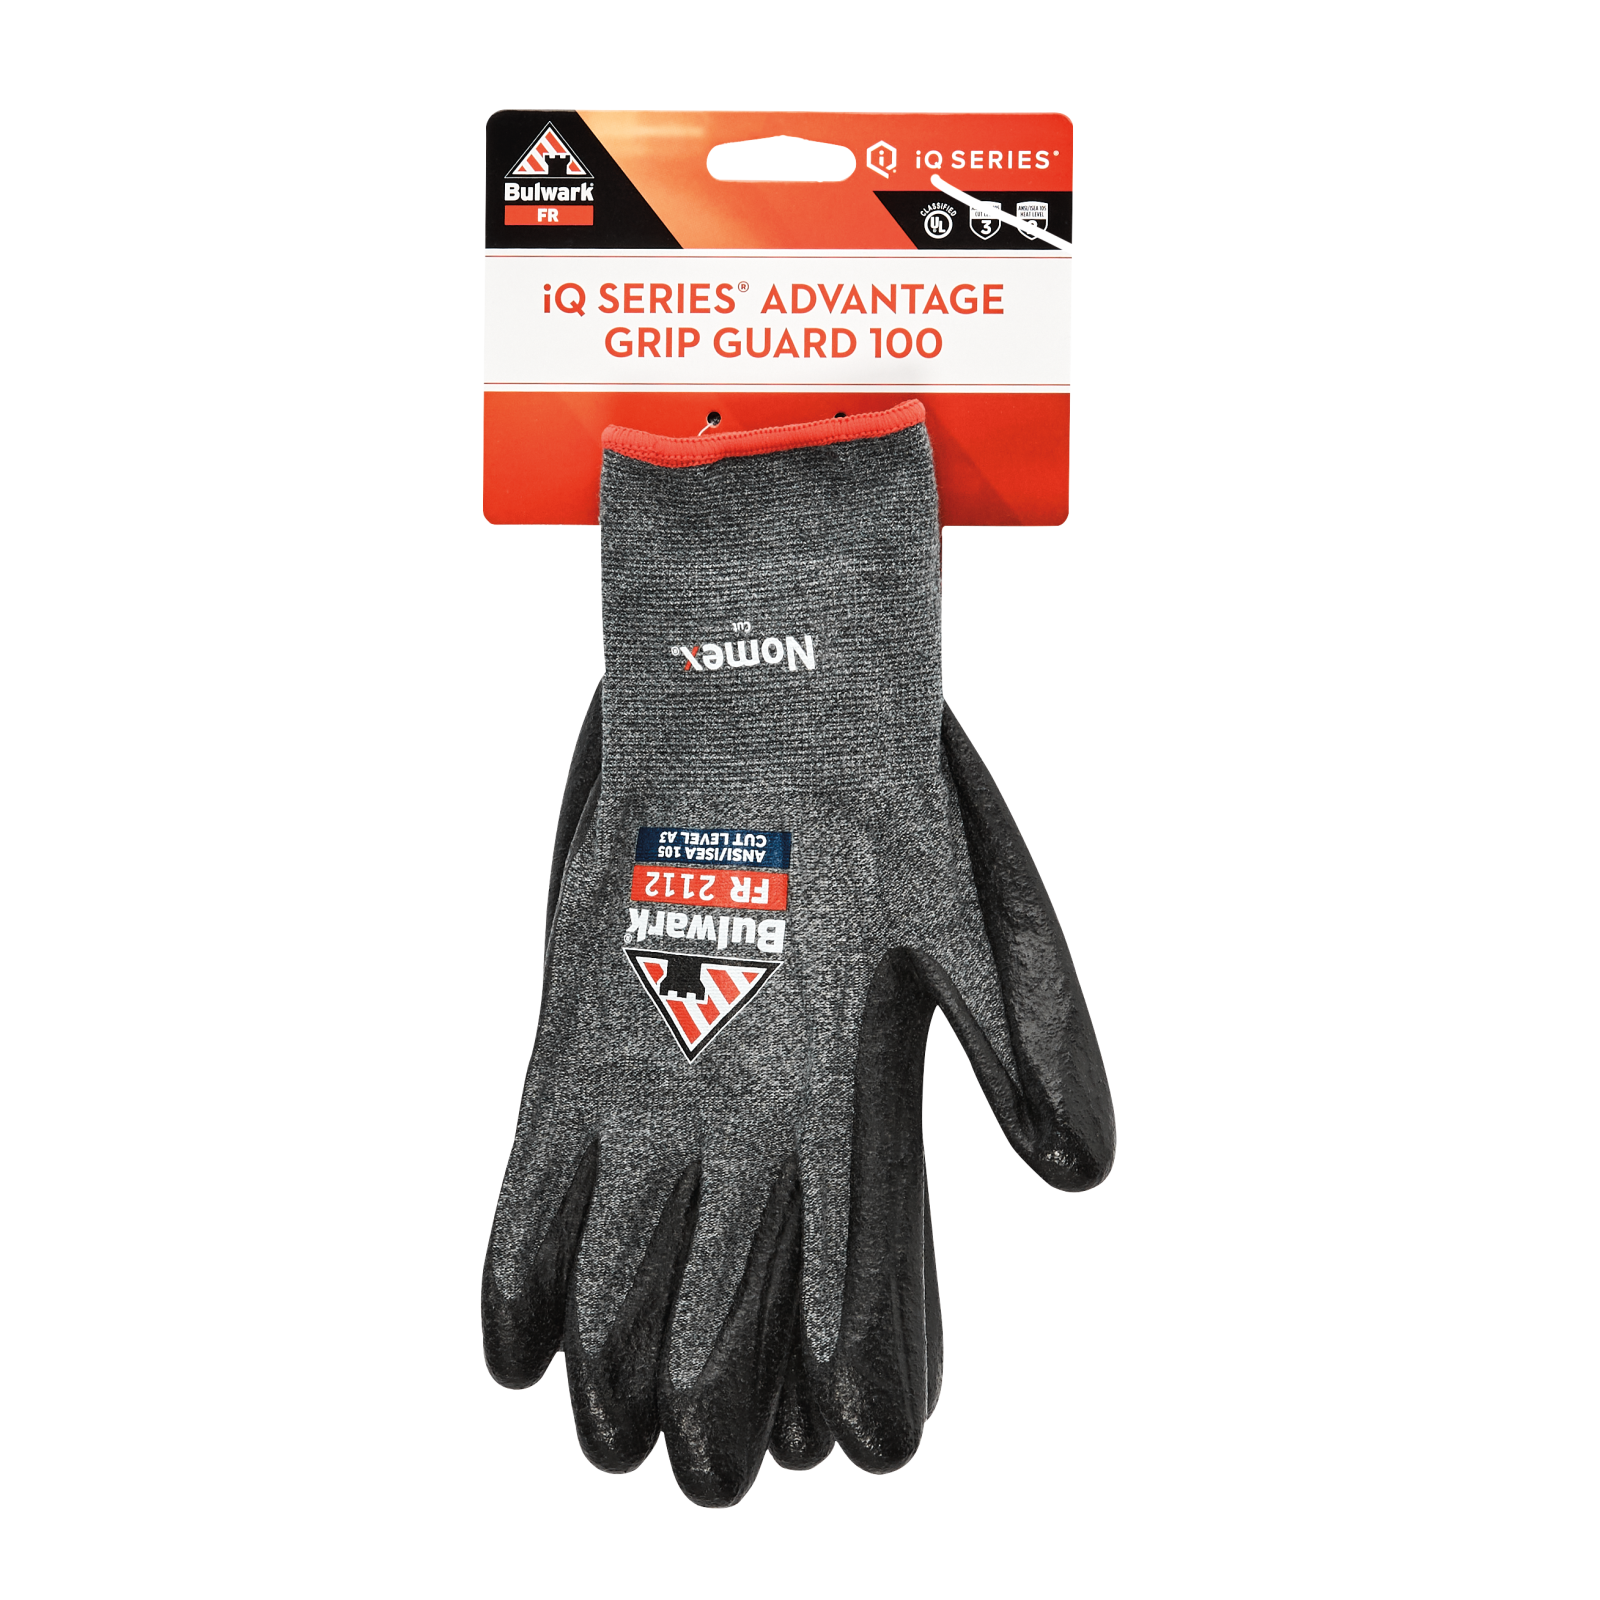 Badlands Flex Glove - Men's Approach Extra Small 21-41648